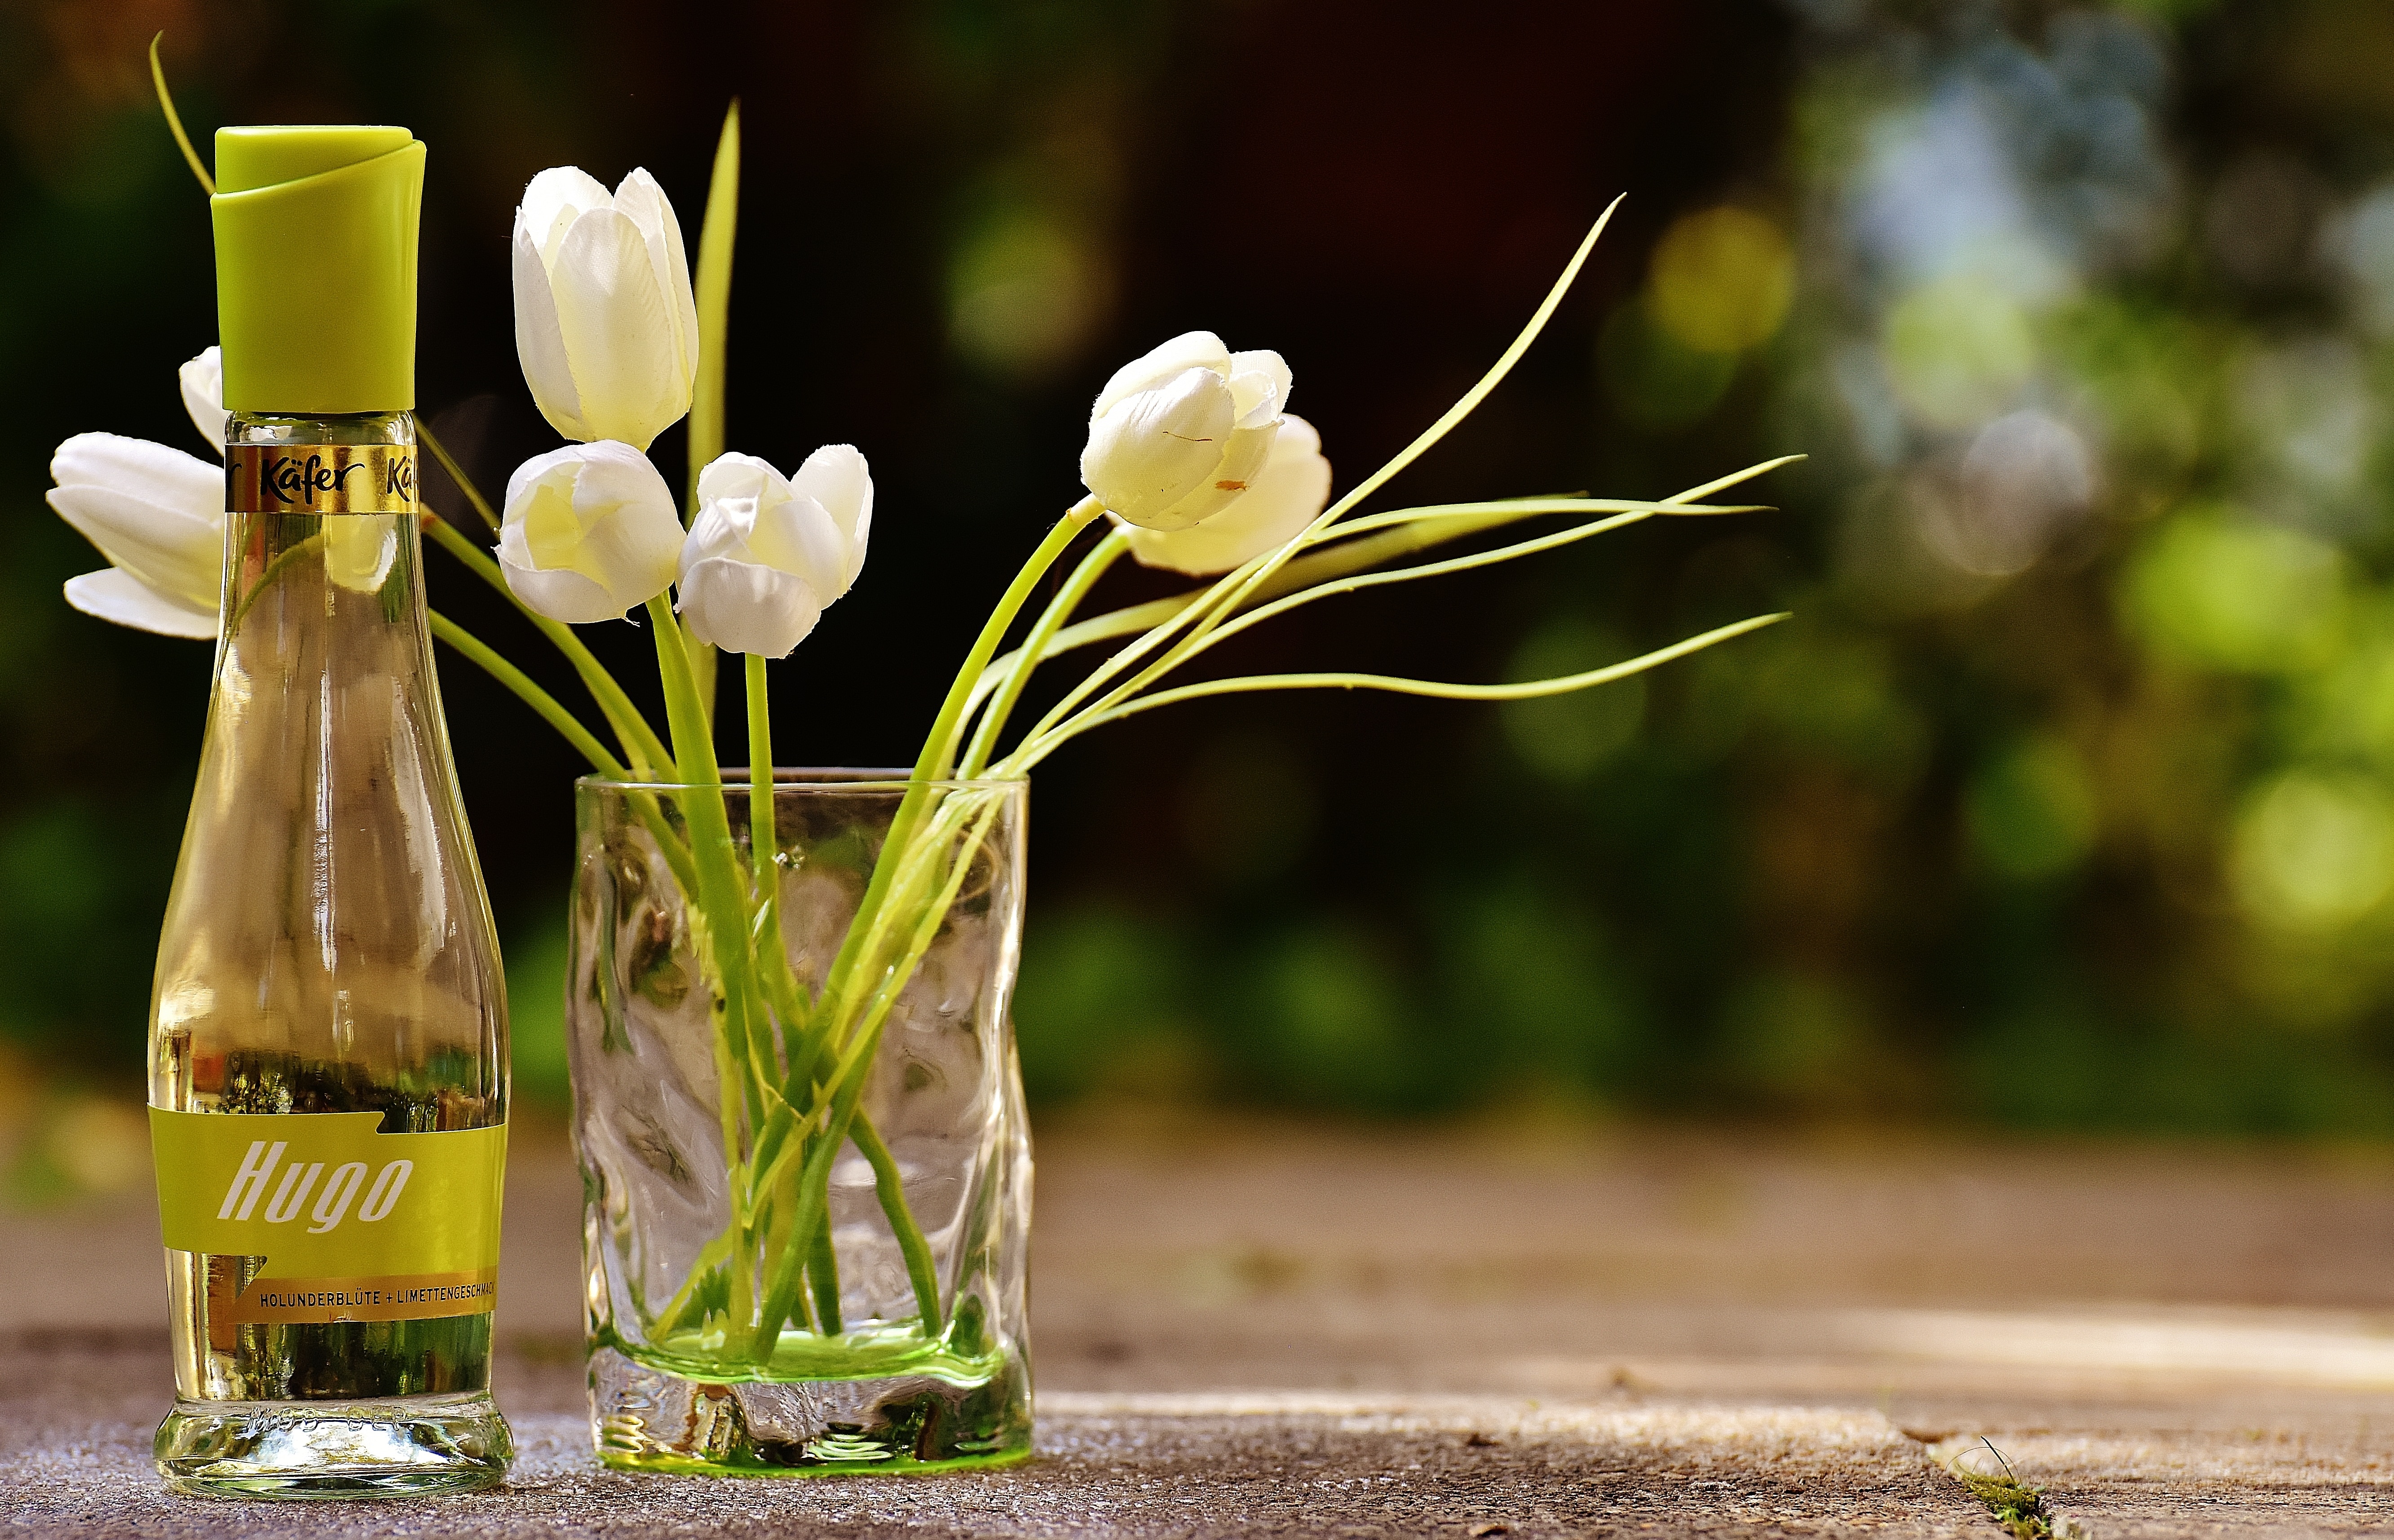 hugo bottle beside white tulips in clear drinking glass